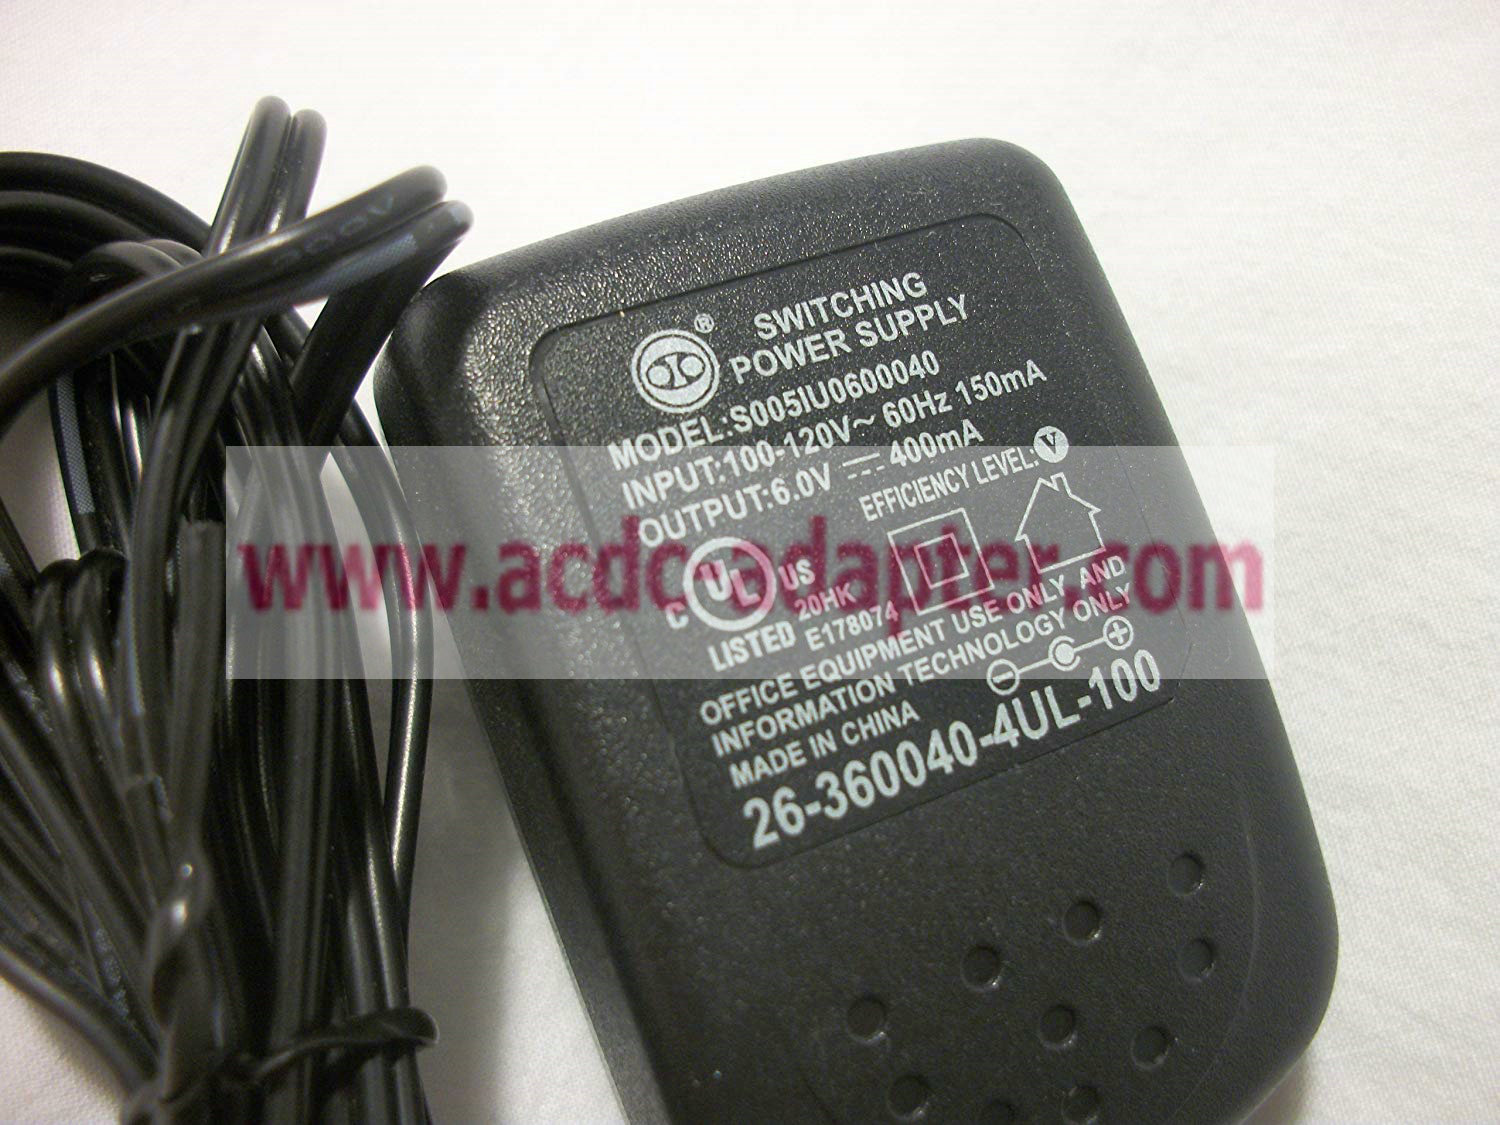 AC Adapter 26-360040-4UL-100 For VTech DM111 DM112 DM223 DM251 DM271 Safe & Sound